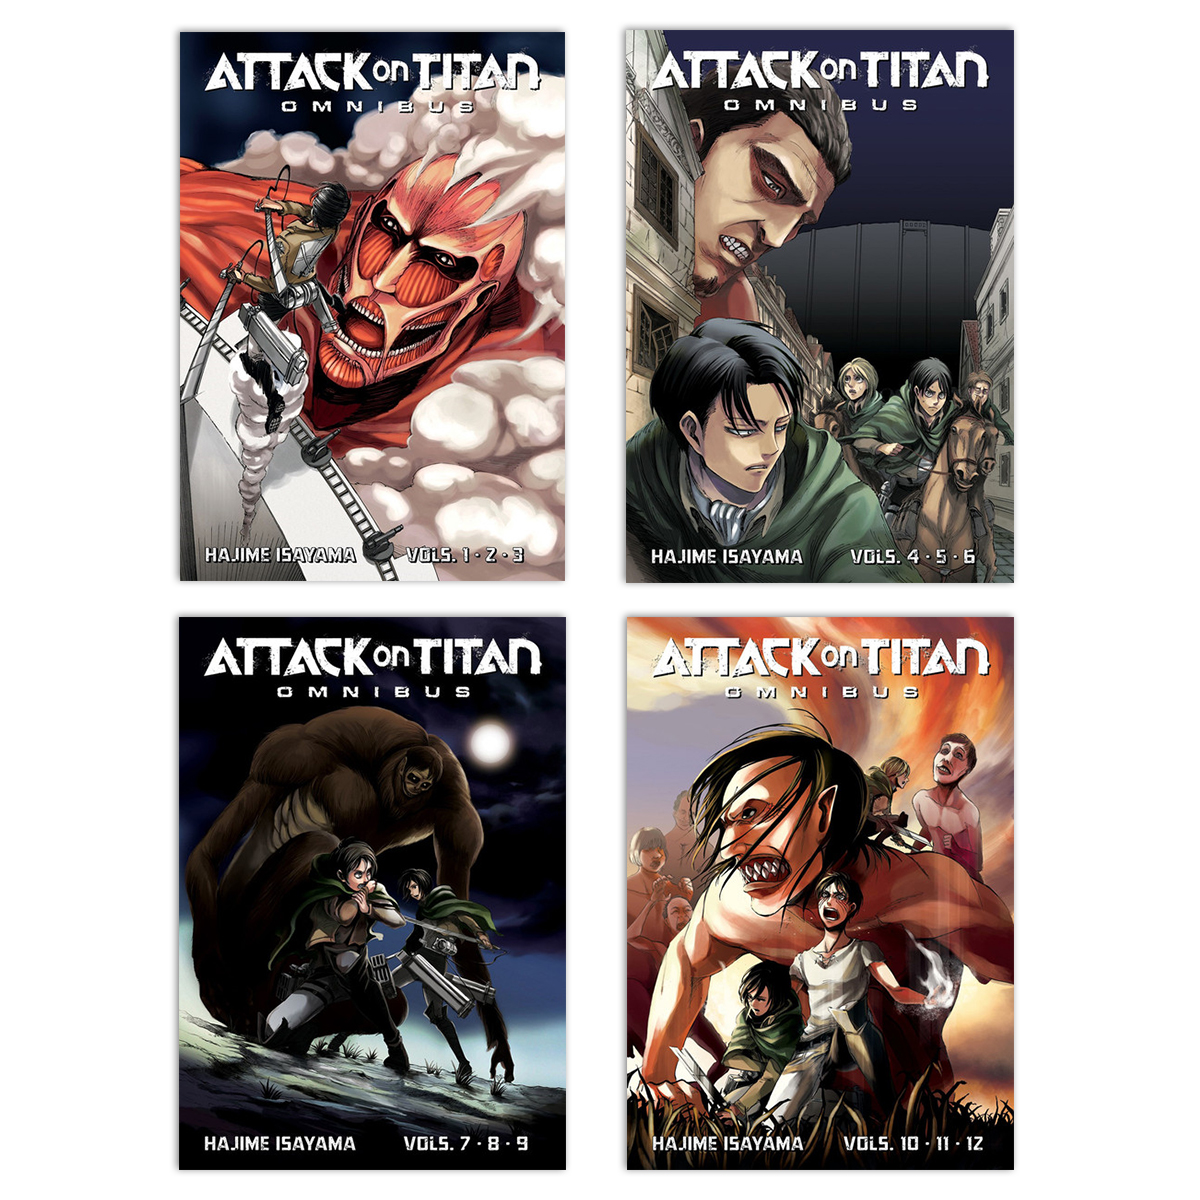 Attack on Titan Manga